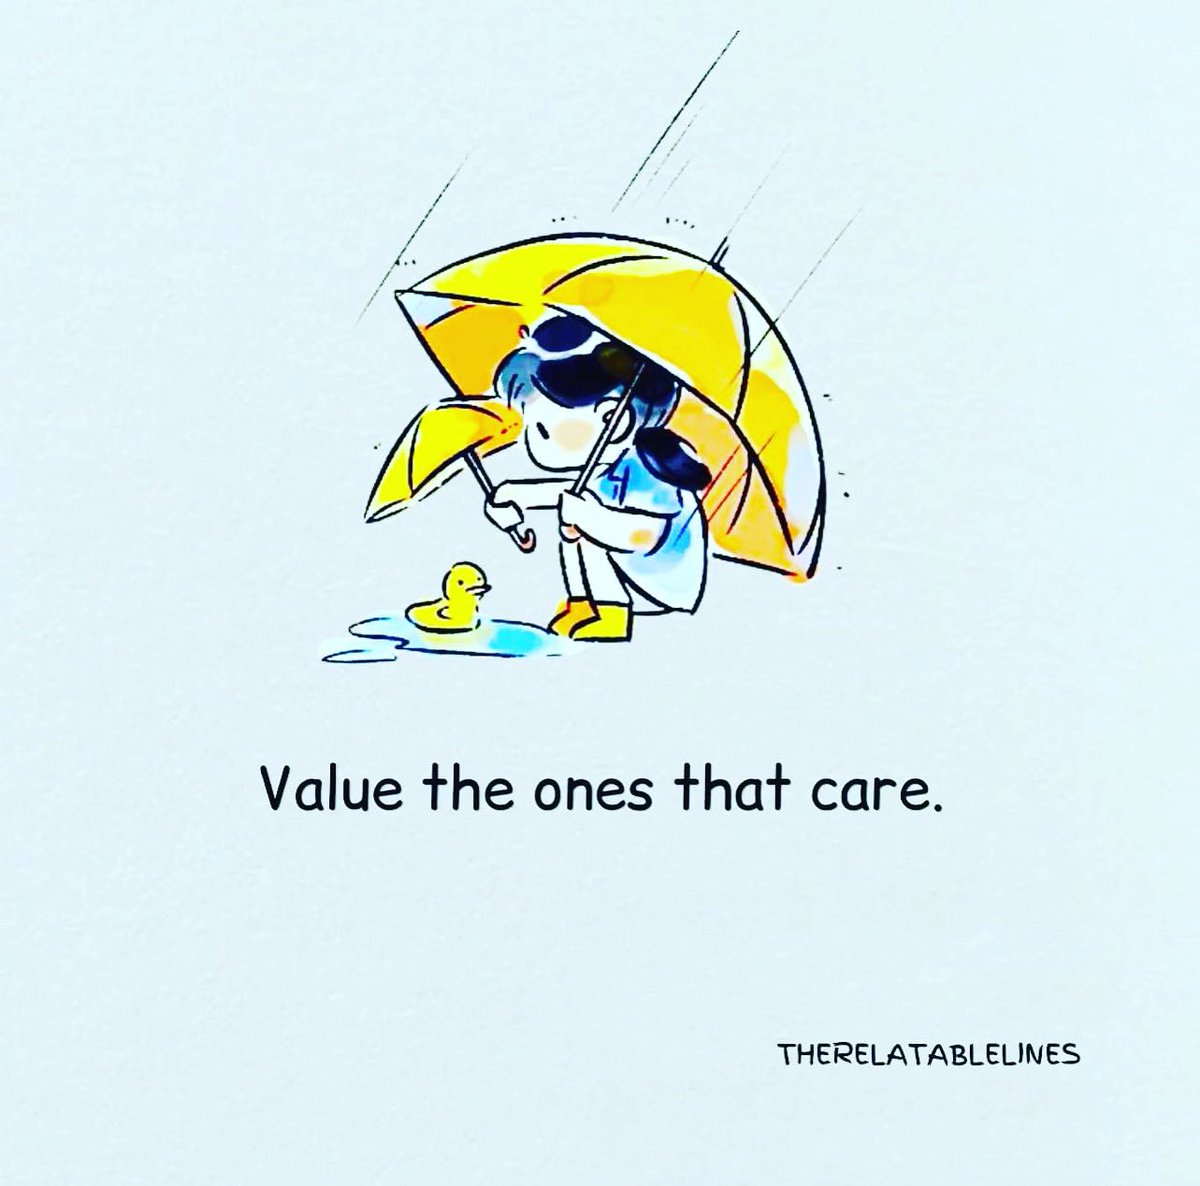 Love this!
💛💛💛
.
.
.
#value #care #enjoy #enjoylife #davisonlupinski #toridavison